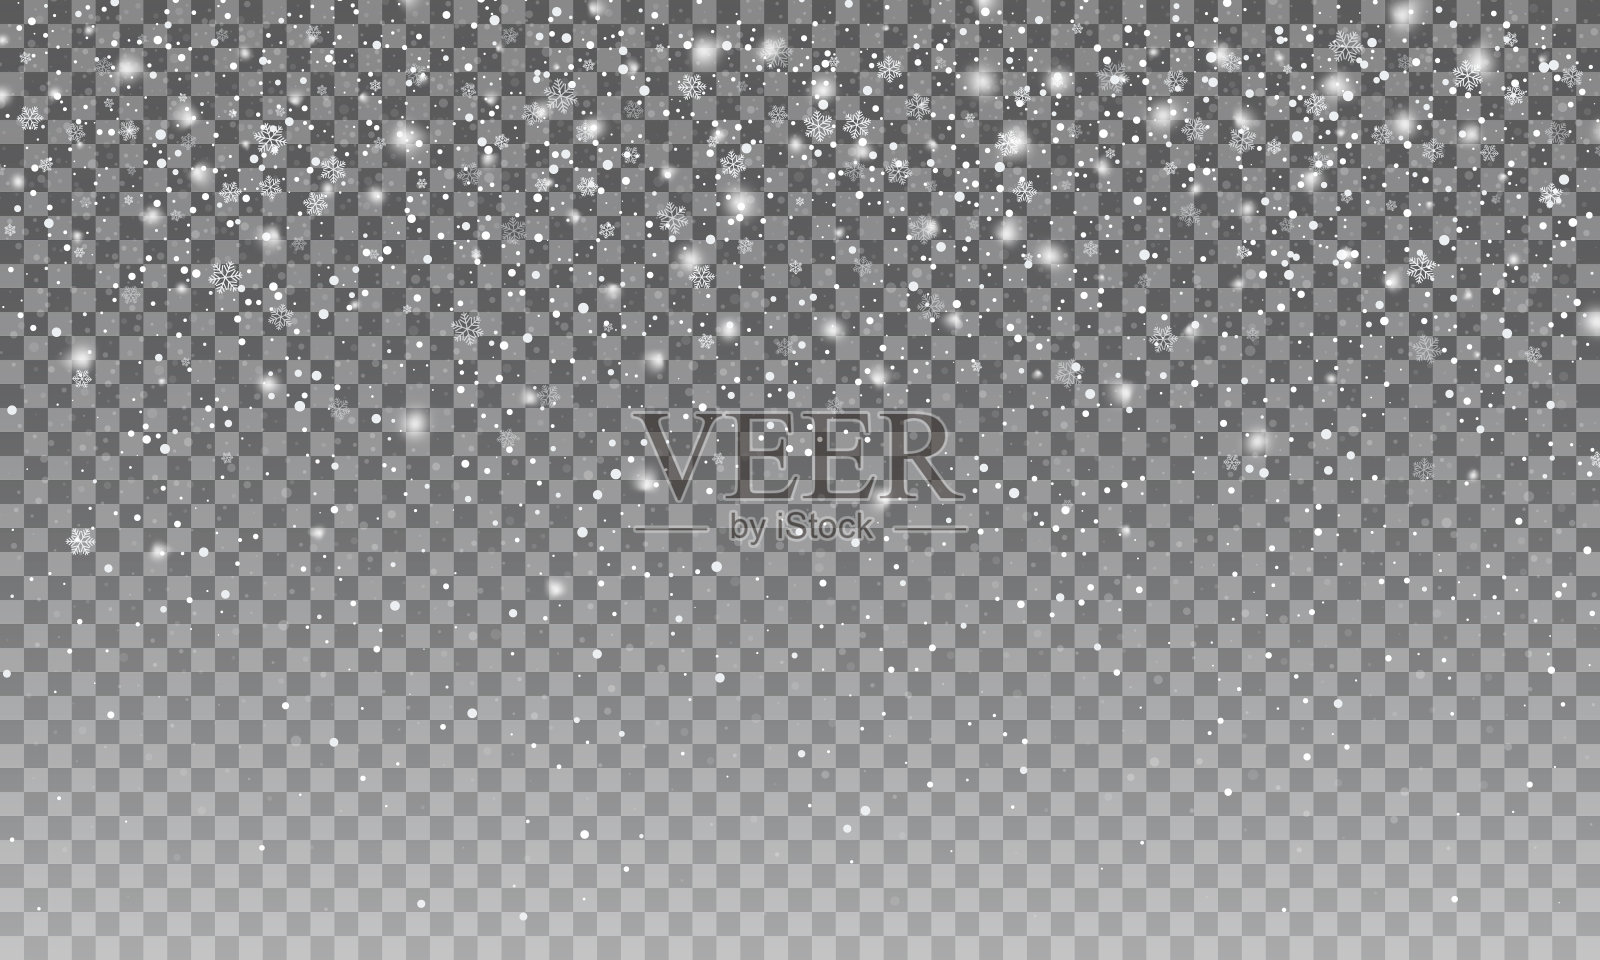 Ralistic雪。矢量透明雪背景。圣诞节和新年的装饰设计元素图片